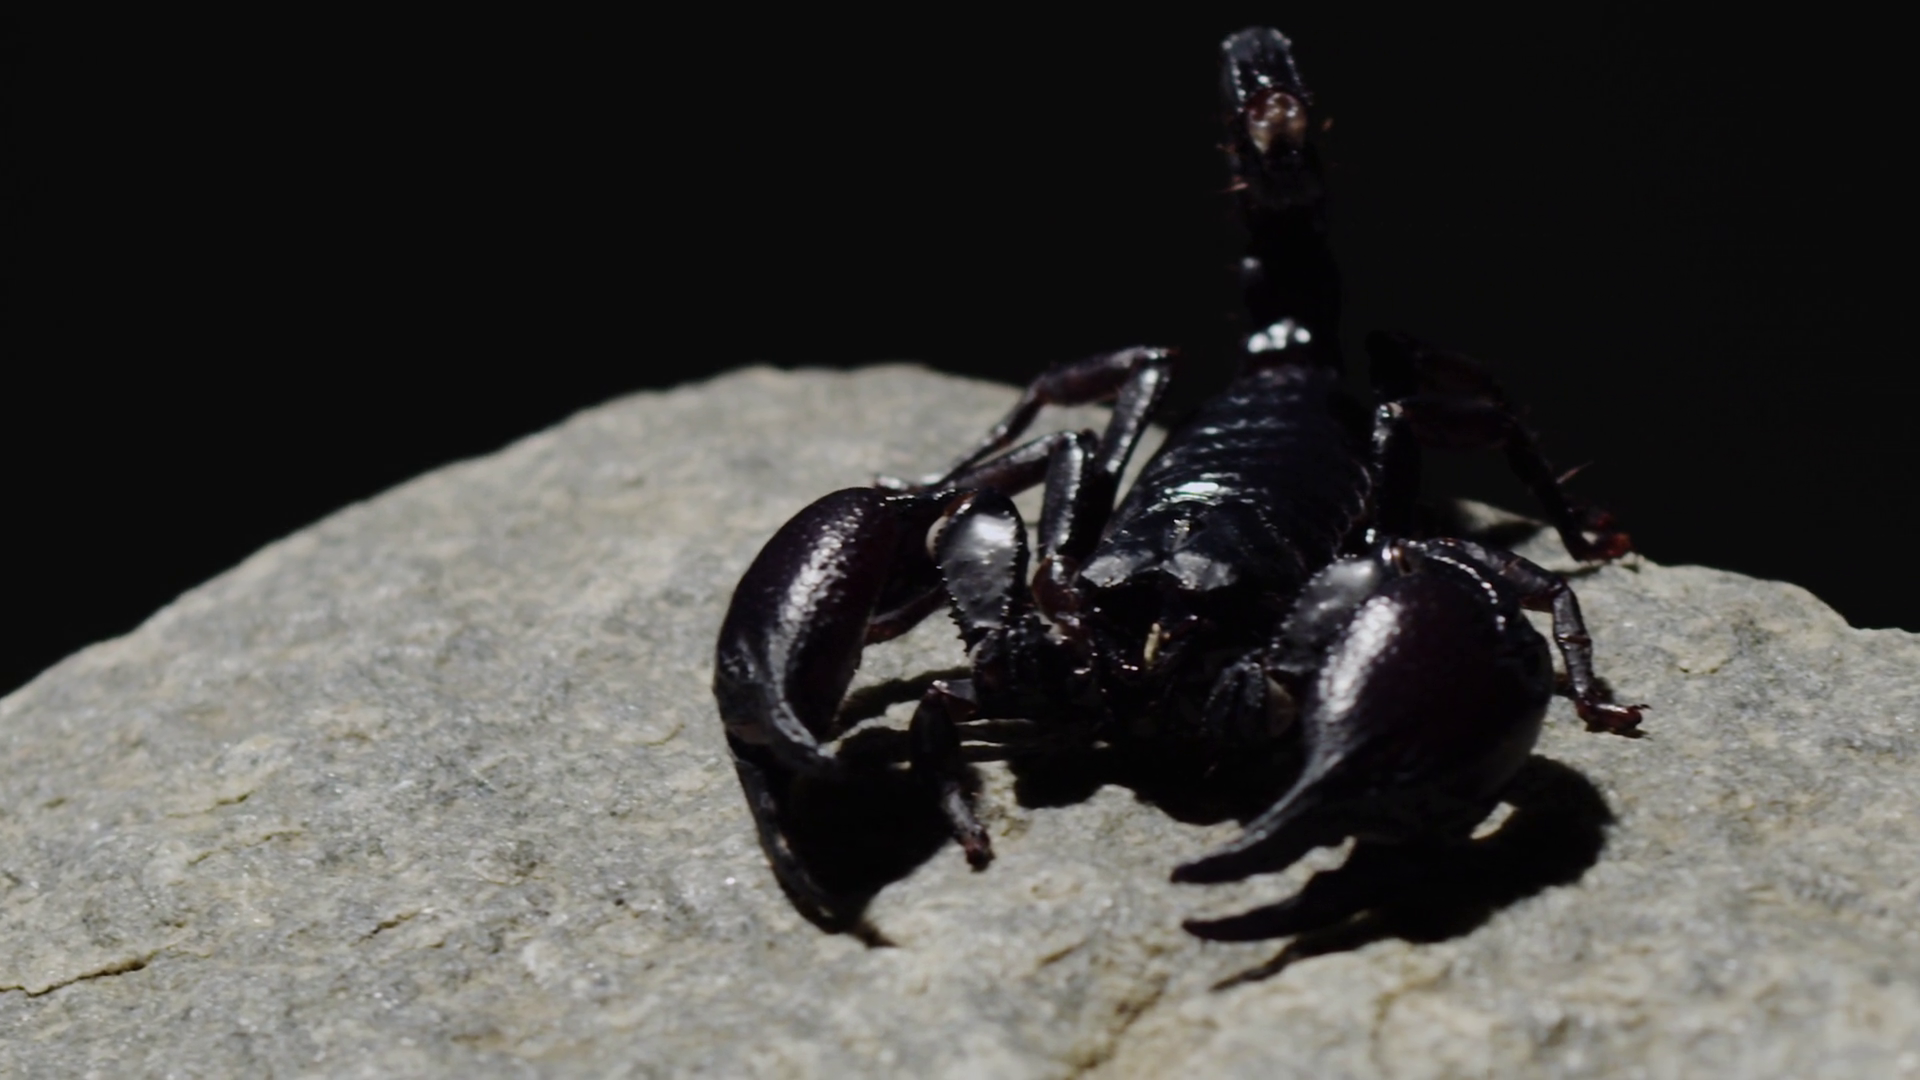 Black Scorpion Dolly Shot 4k Stock Video Footage - VideoBlocks